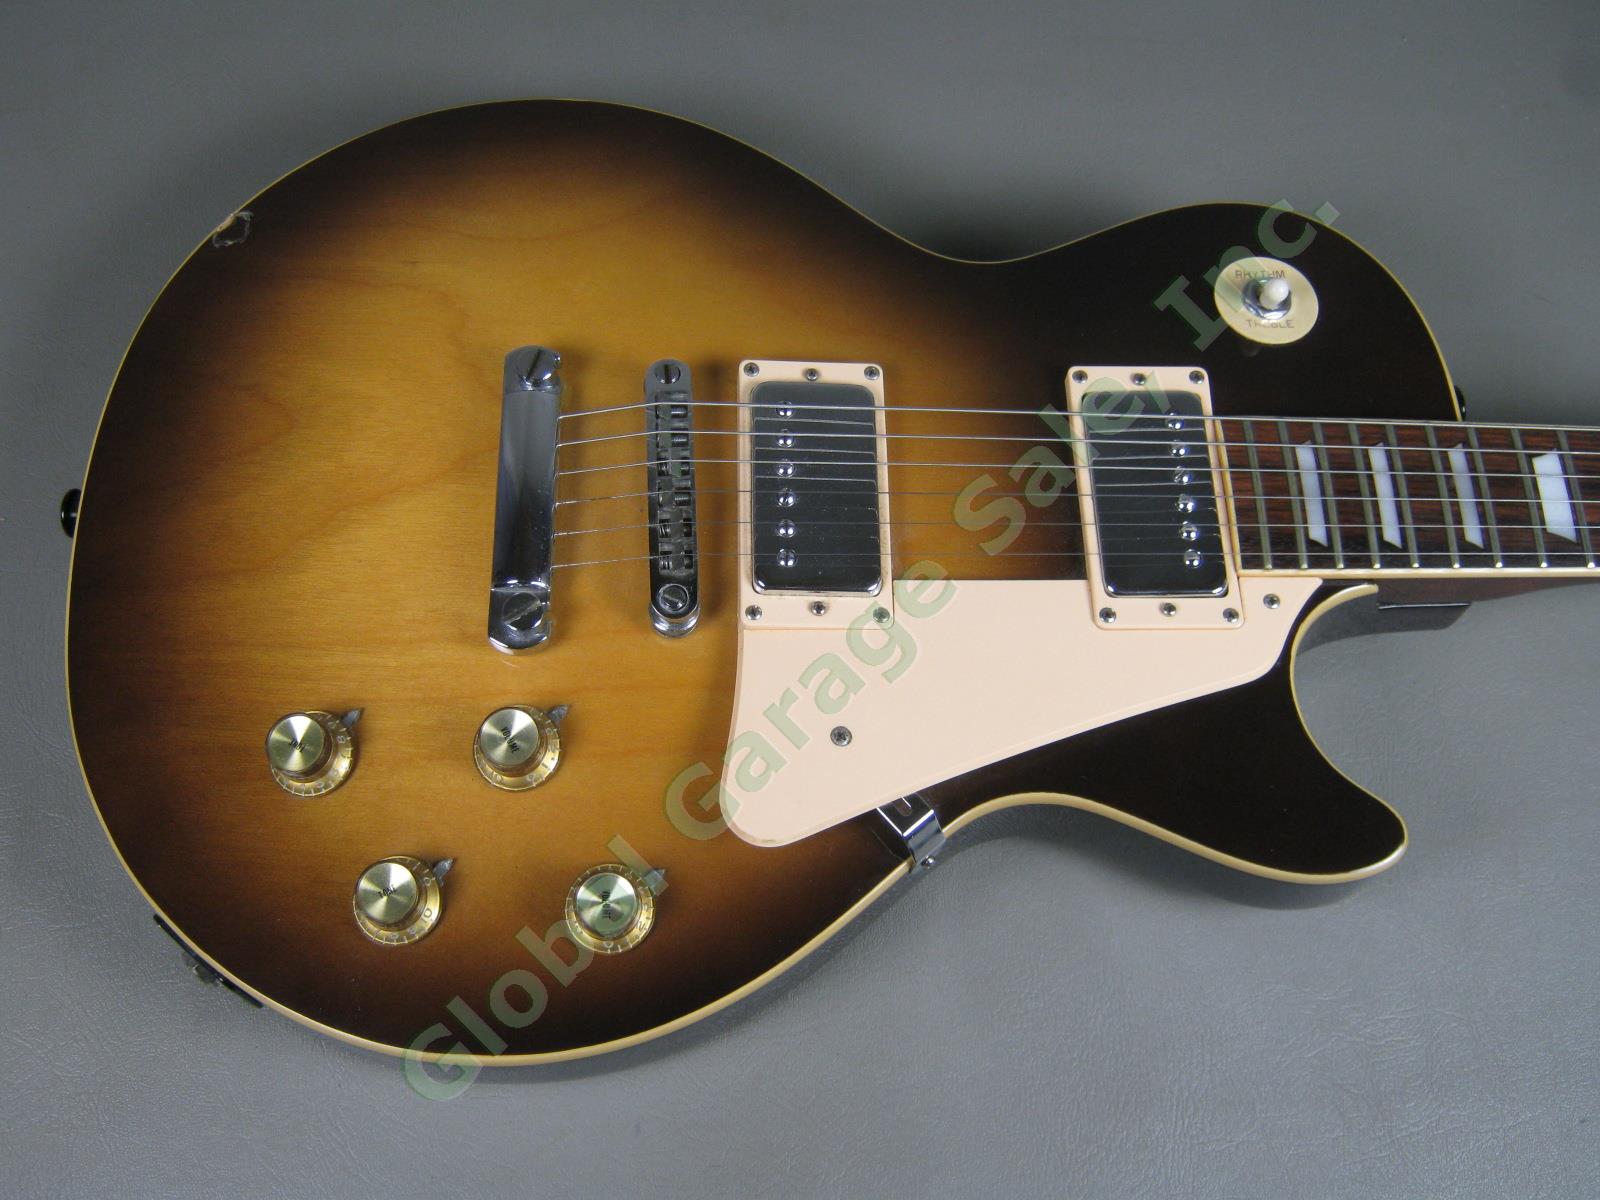 Vtg Matsumoku Aria Mach 1 Les Paul Copy Electric Guitar MIJ Made in Japan NO RES 2